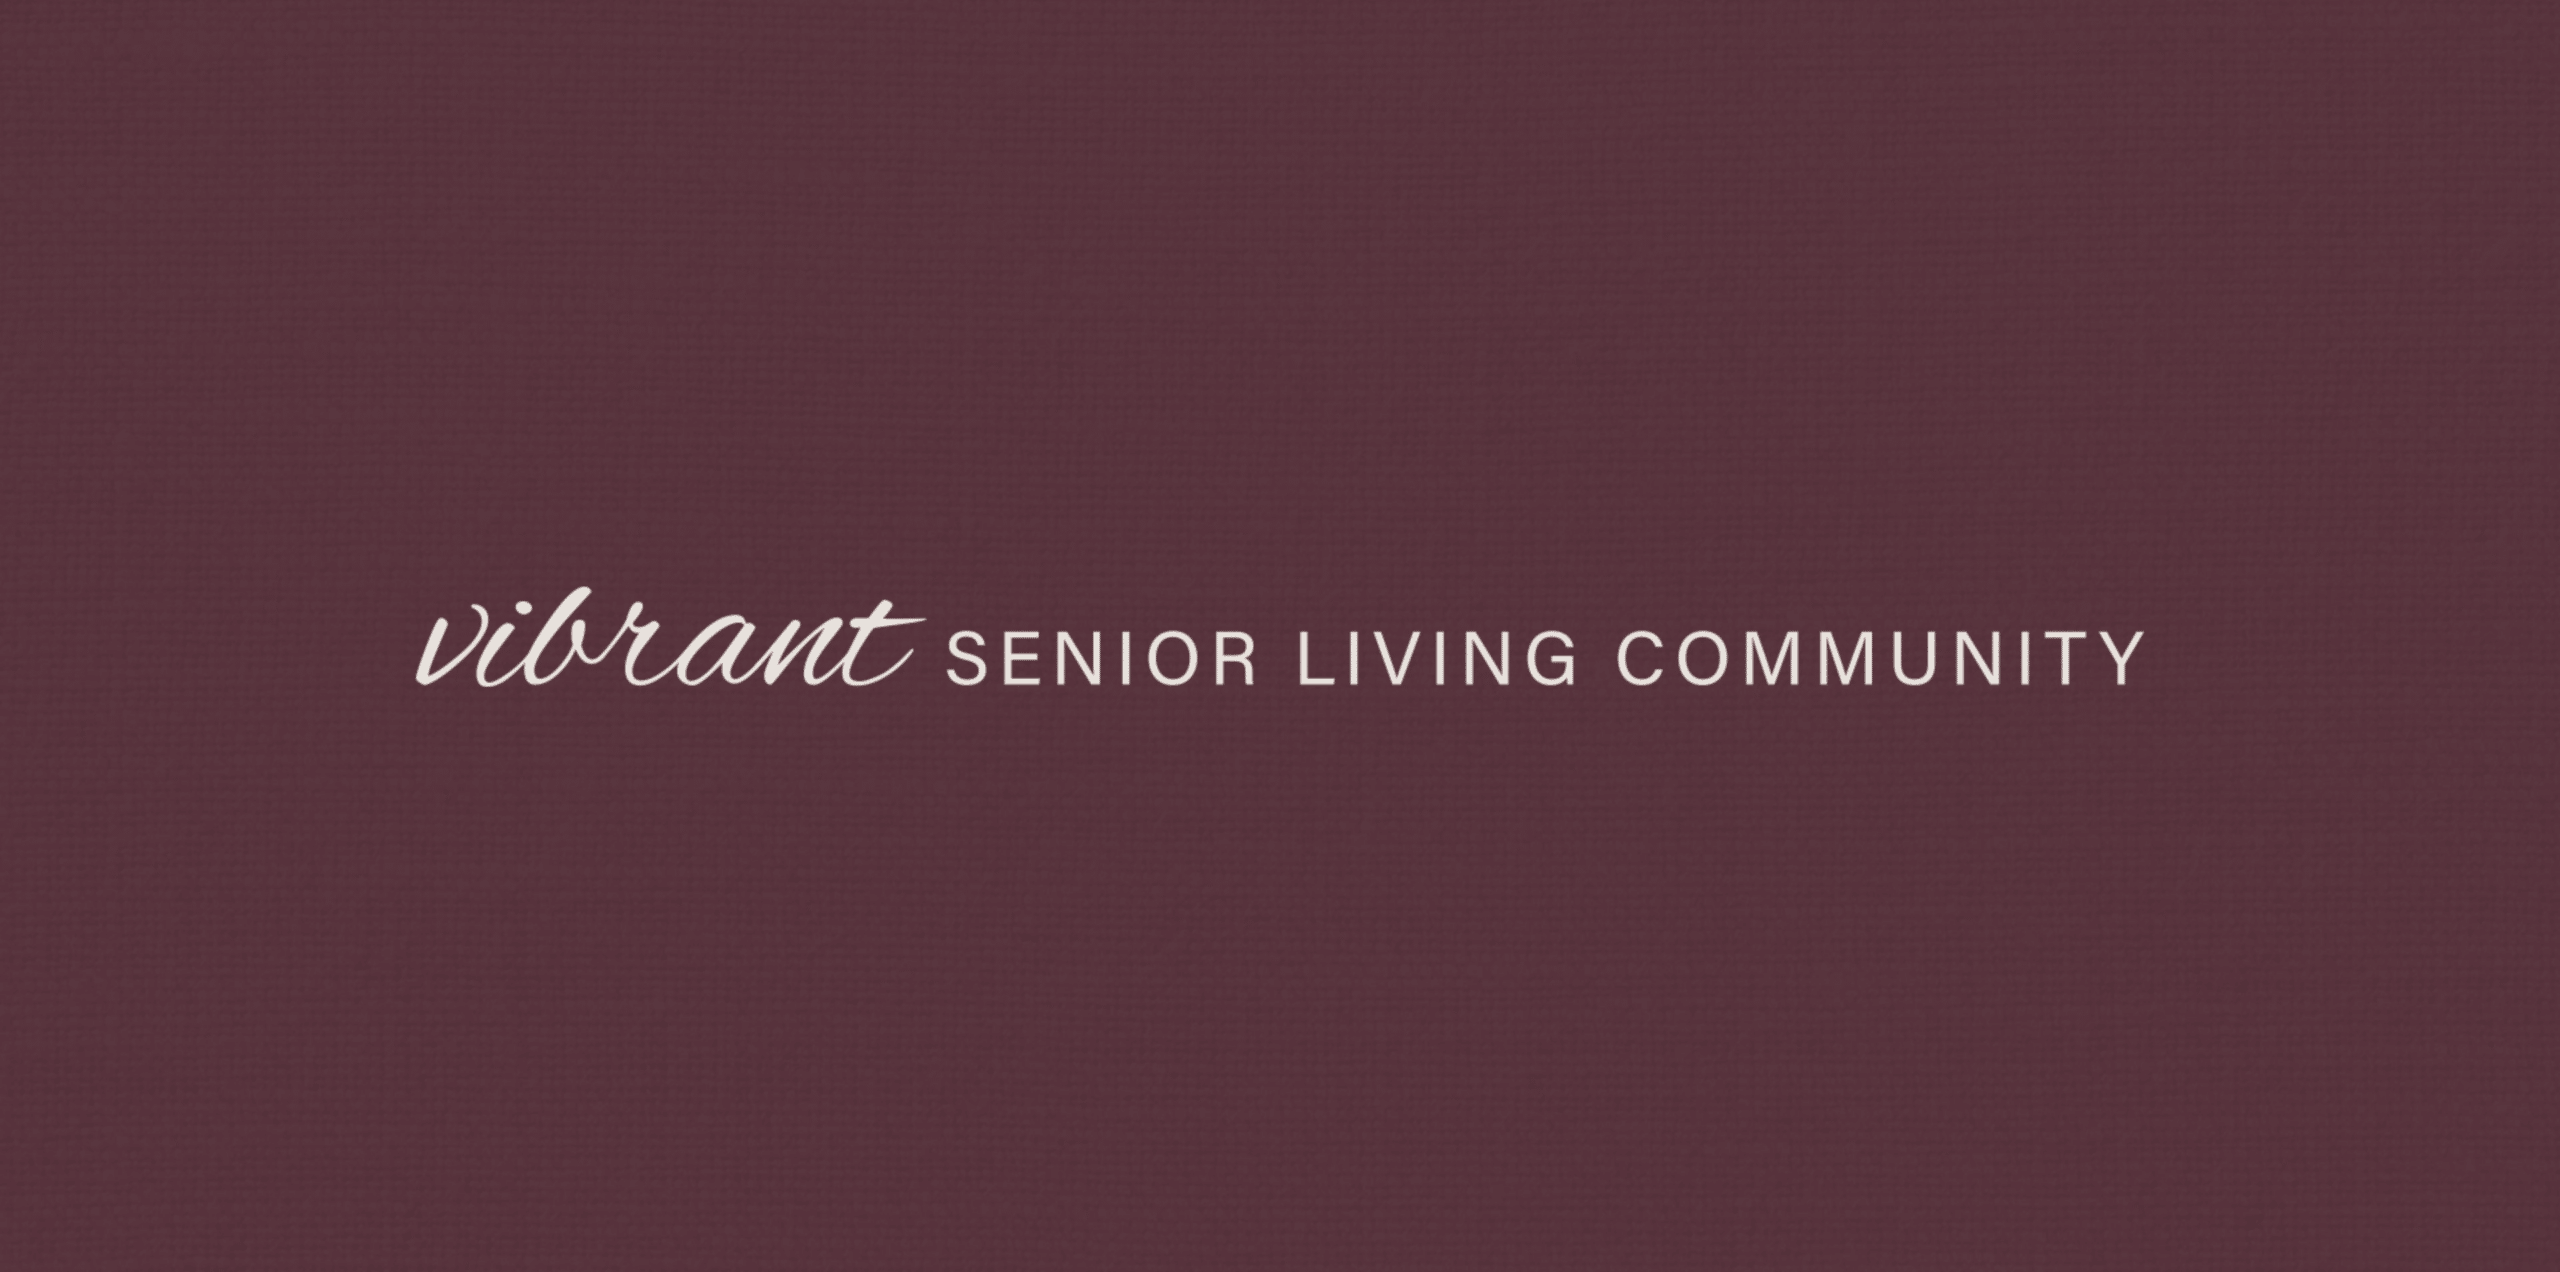 Senior Living Tagline